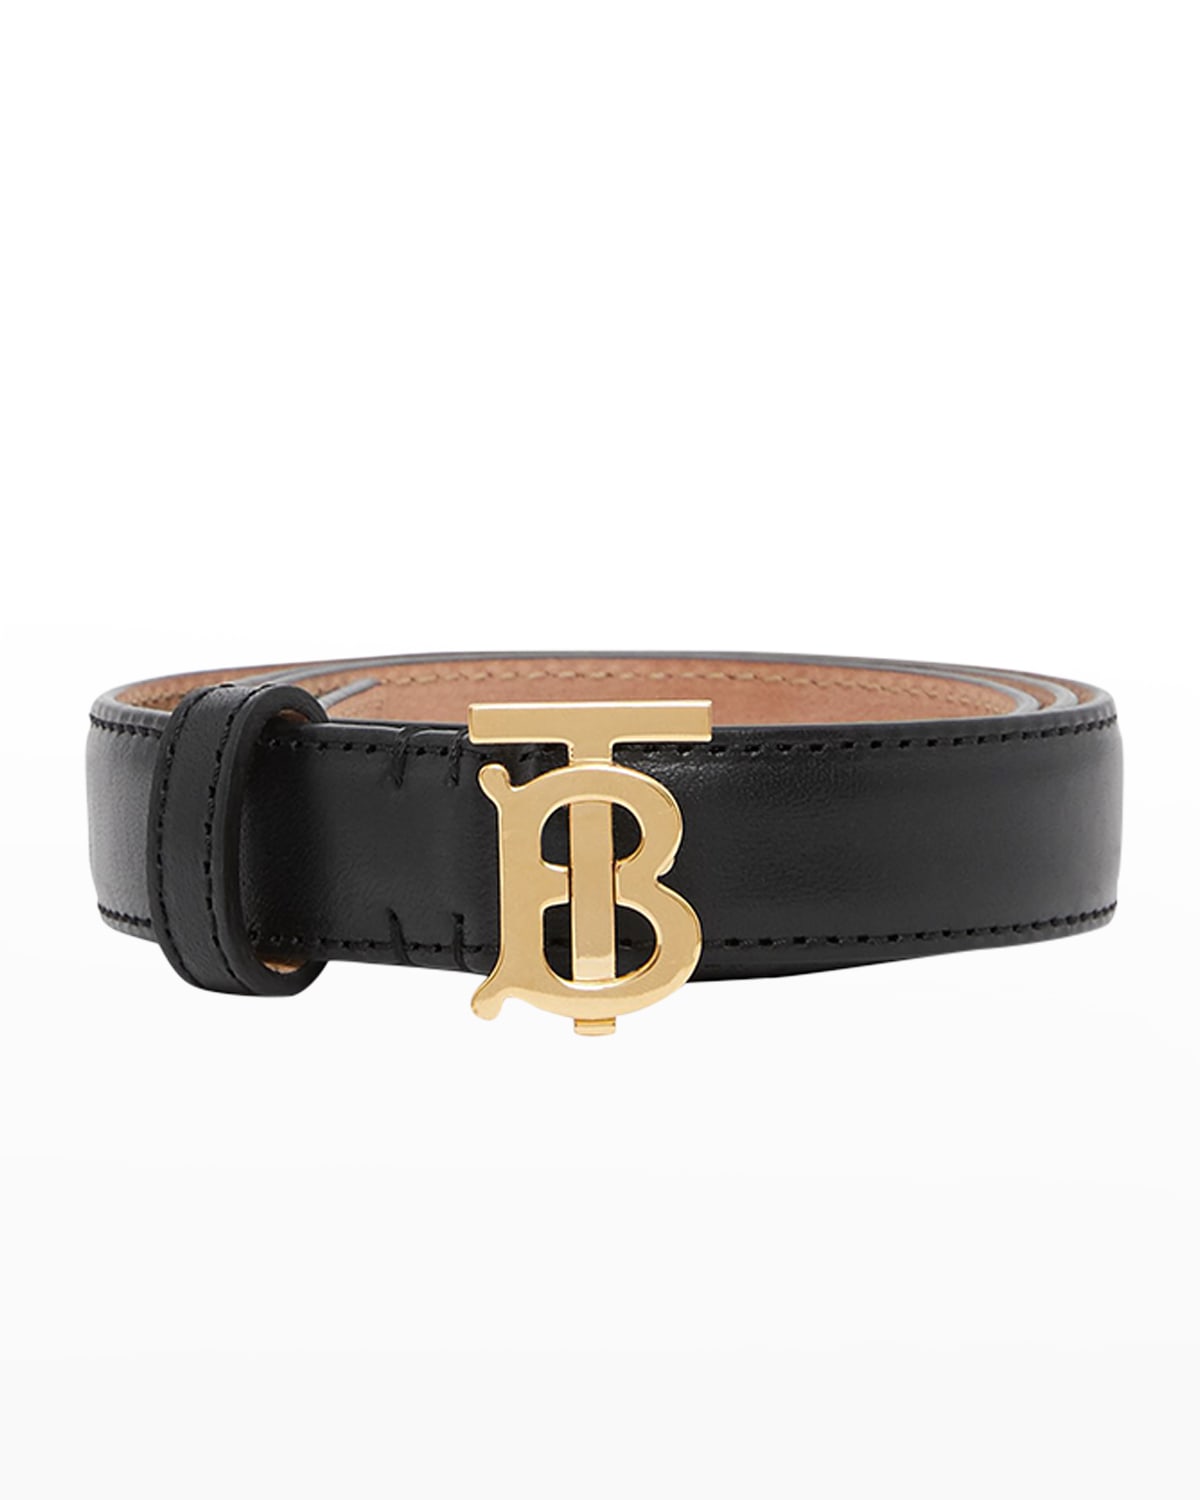 Burberry TB Calf Leather Skinny Belt